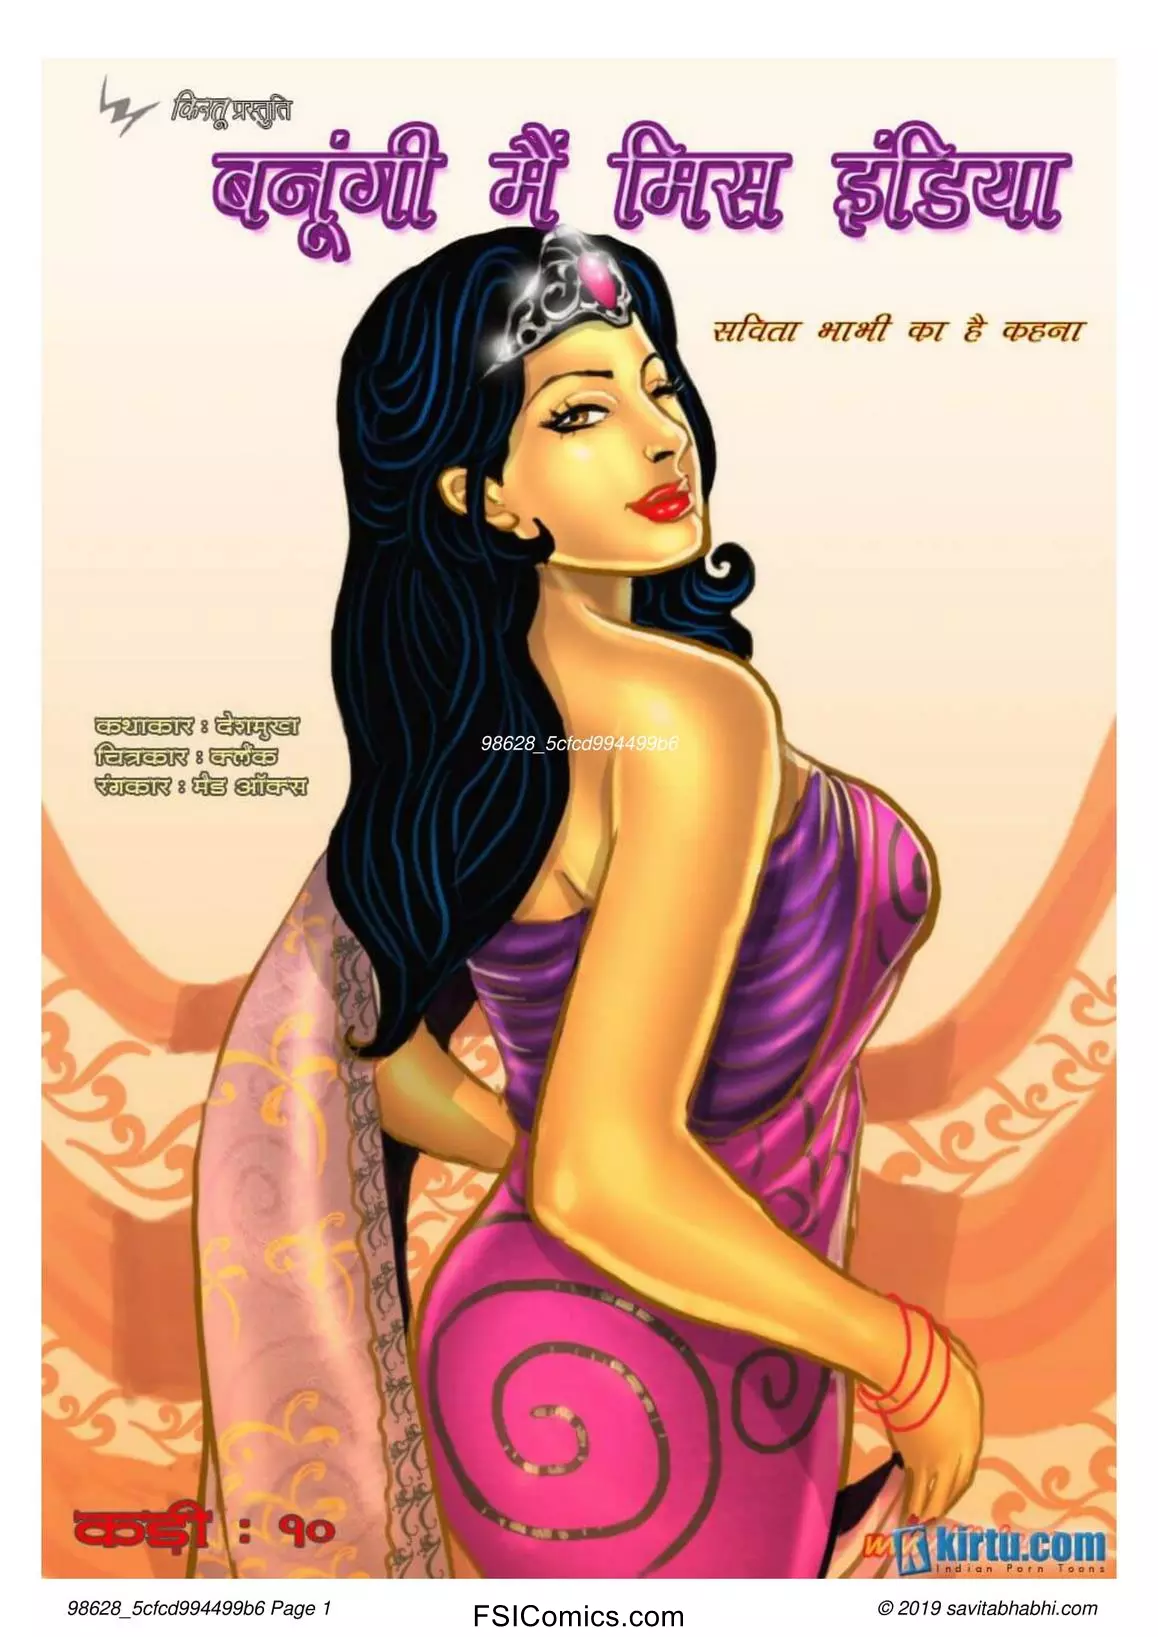 Savita Bhabhi Episode 10 Hindi – Main Banugi Miss India- (मैं बनूँगी मिस इन्डिया) - 19 - FSIComics